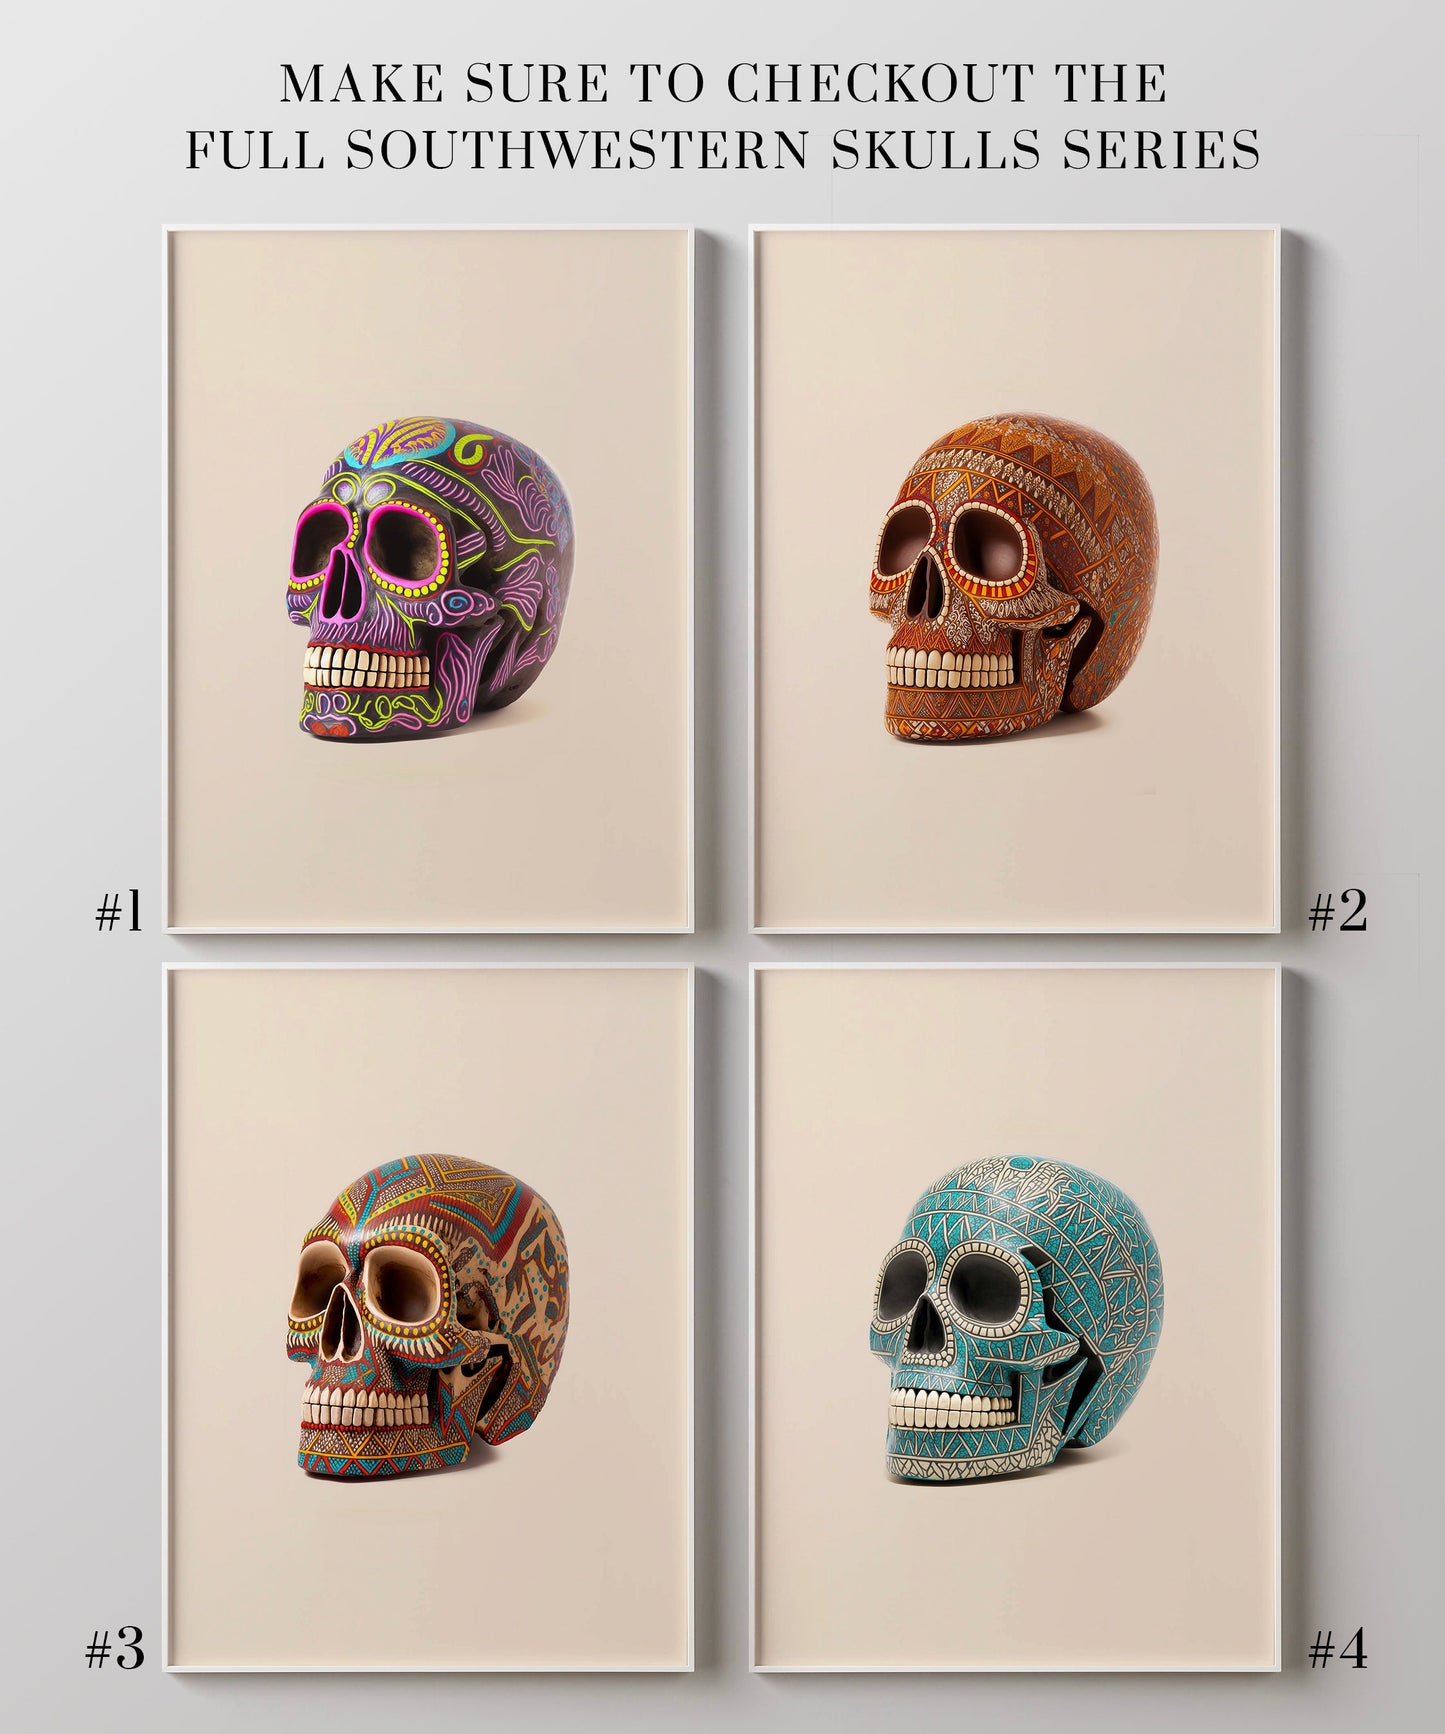 Southwestern Skulls #4 of 5